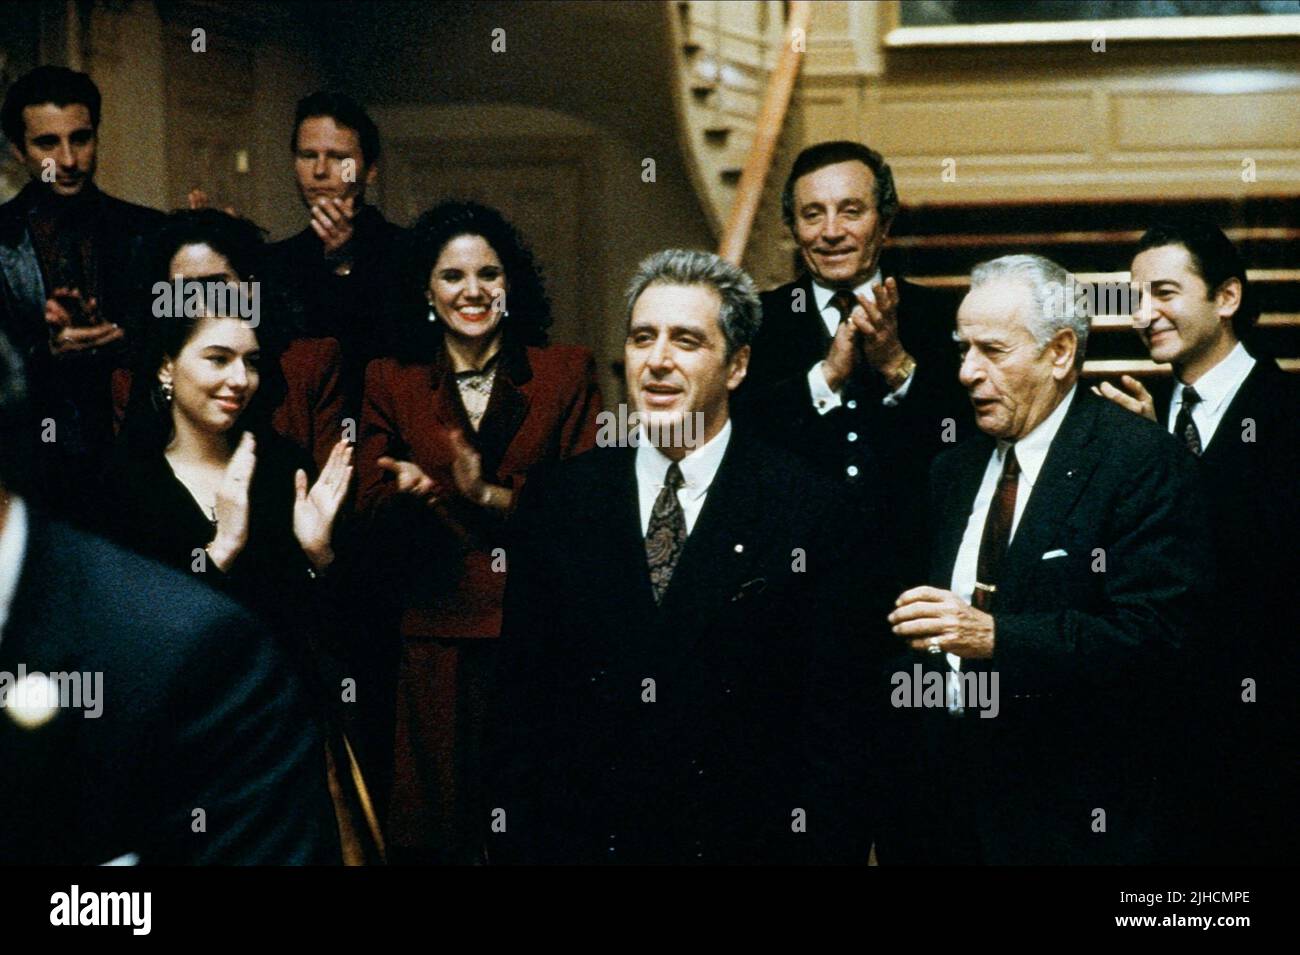 SOFIA COPPOLA, Al Pacino, AL MARTINO, ELI WALLACH, The Godfather : Part III, 1990 Banque D'Images